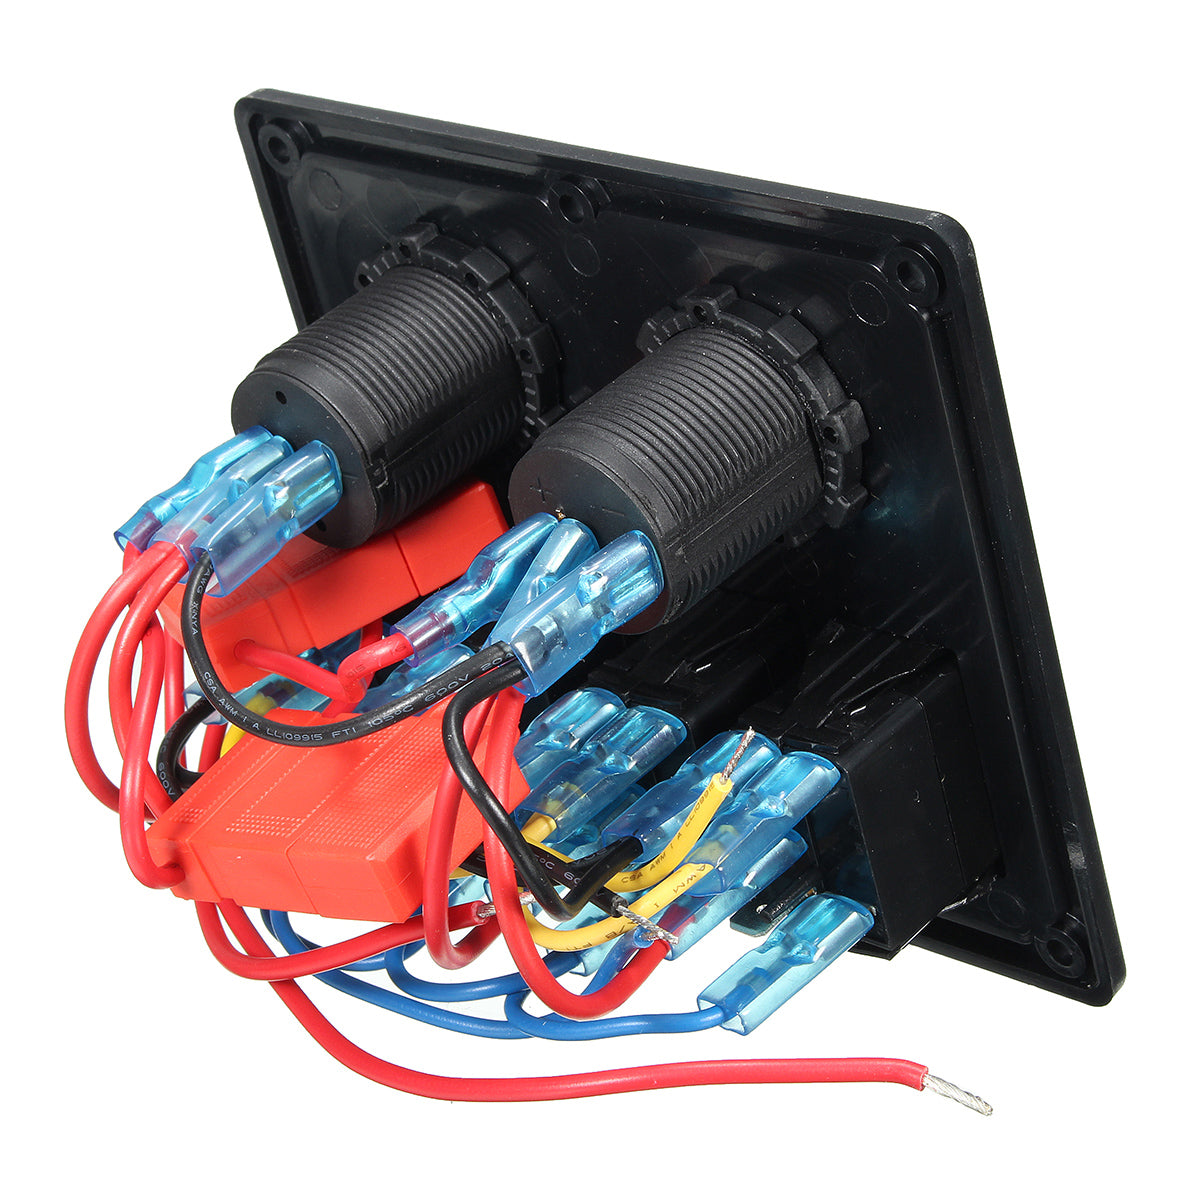 Tomato 12V-24V 4 Gang LED Car/Marine Boat/RV Rocker Switch Panel Circuit Dual USB Power Socket